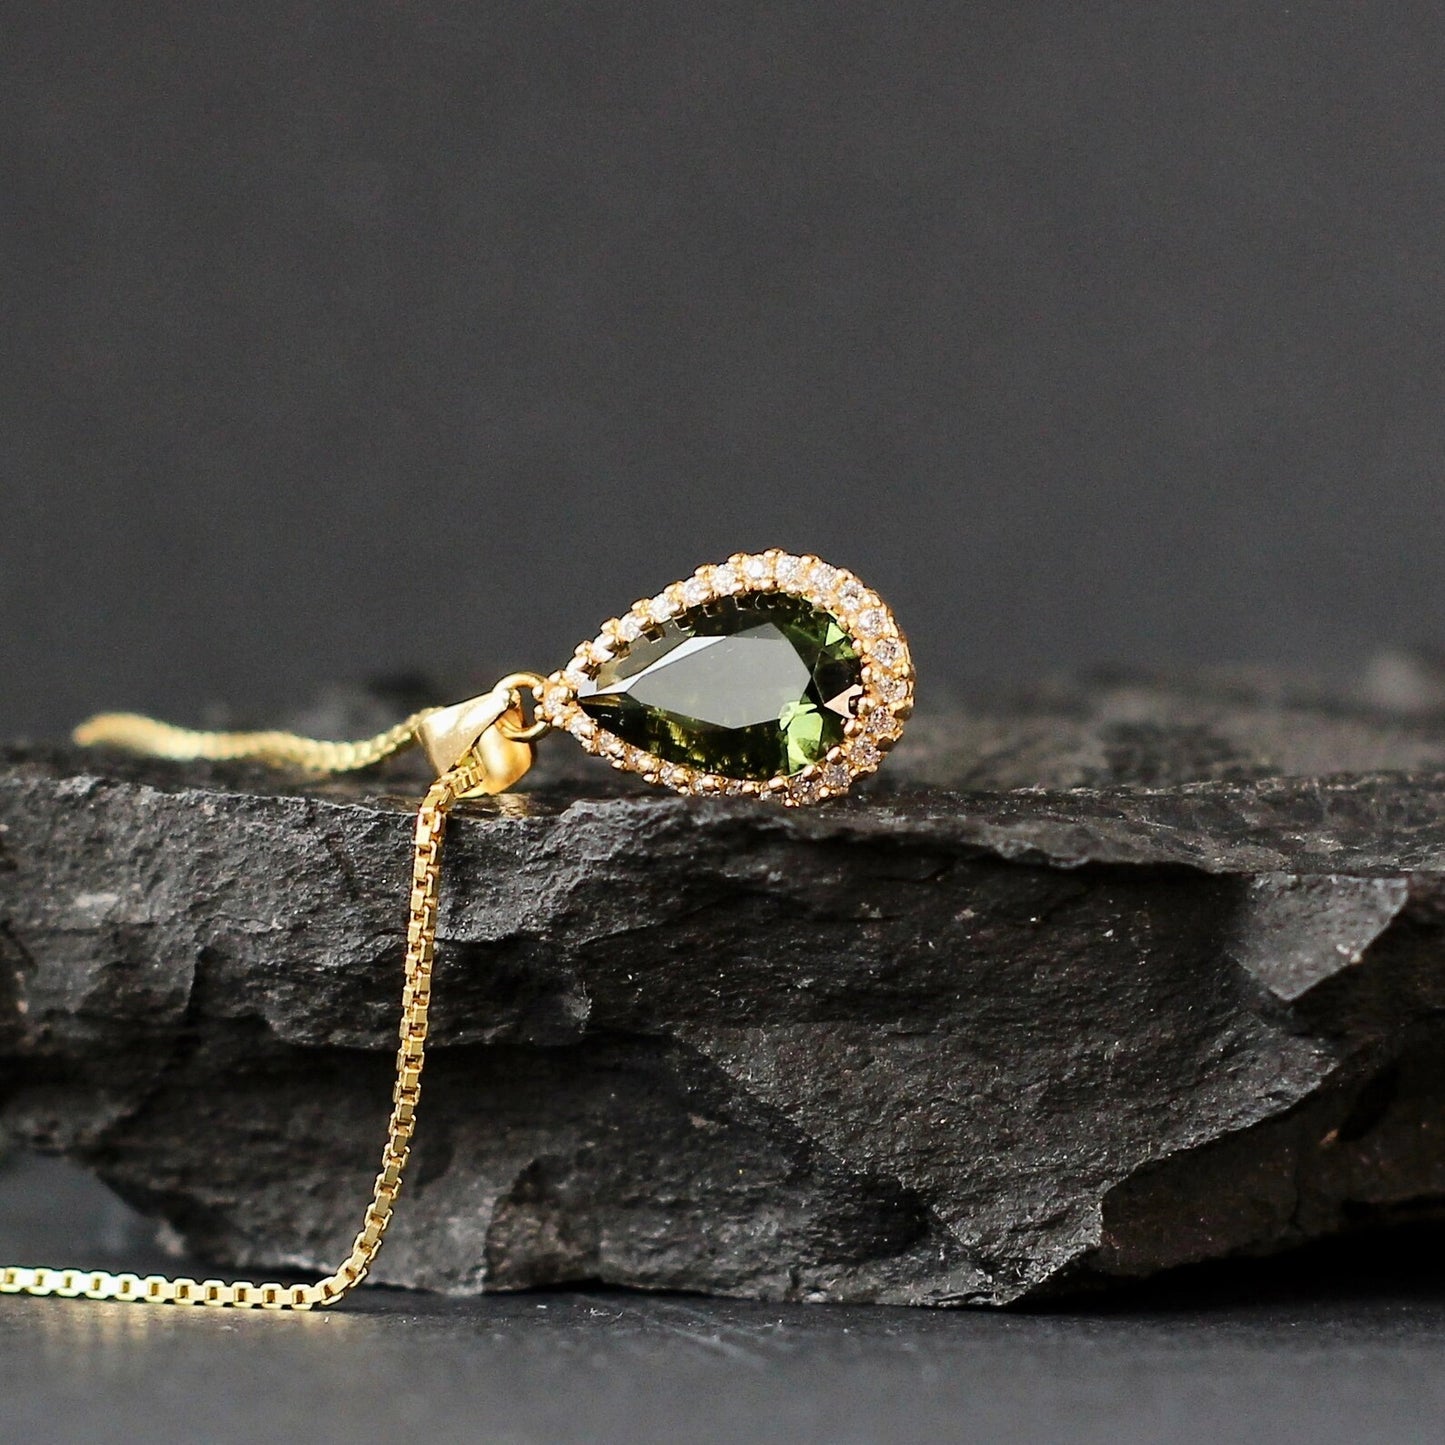 8х12 mm stone CZECH MOLDAVITE Pendant Silver Genuine Moldavite jewelry- Authentic moldavite necklace real moldavite crystal necklace gift